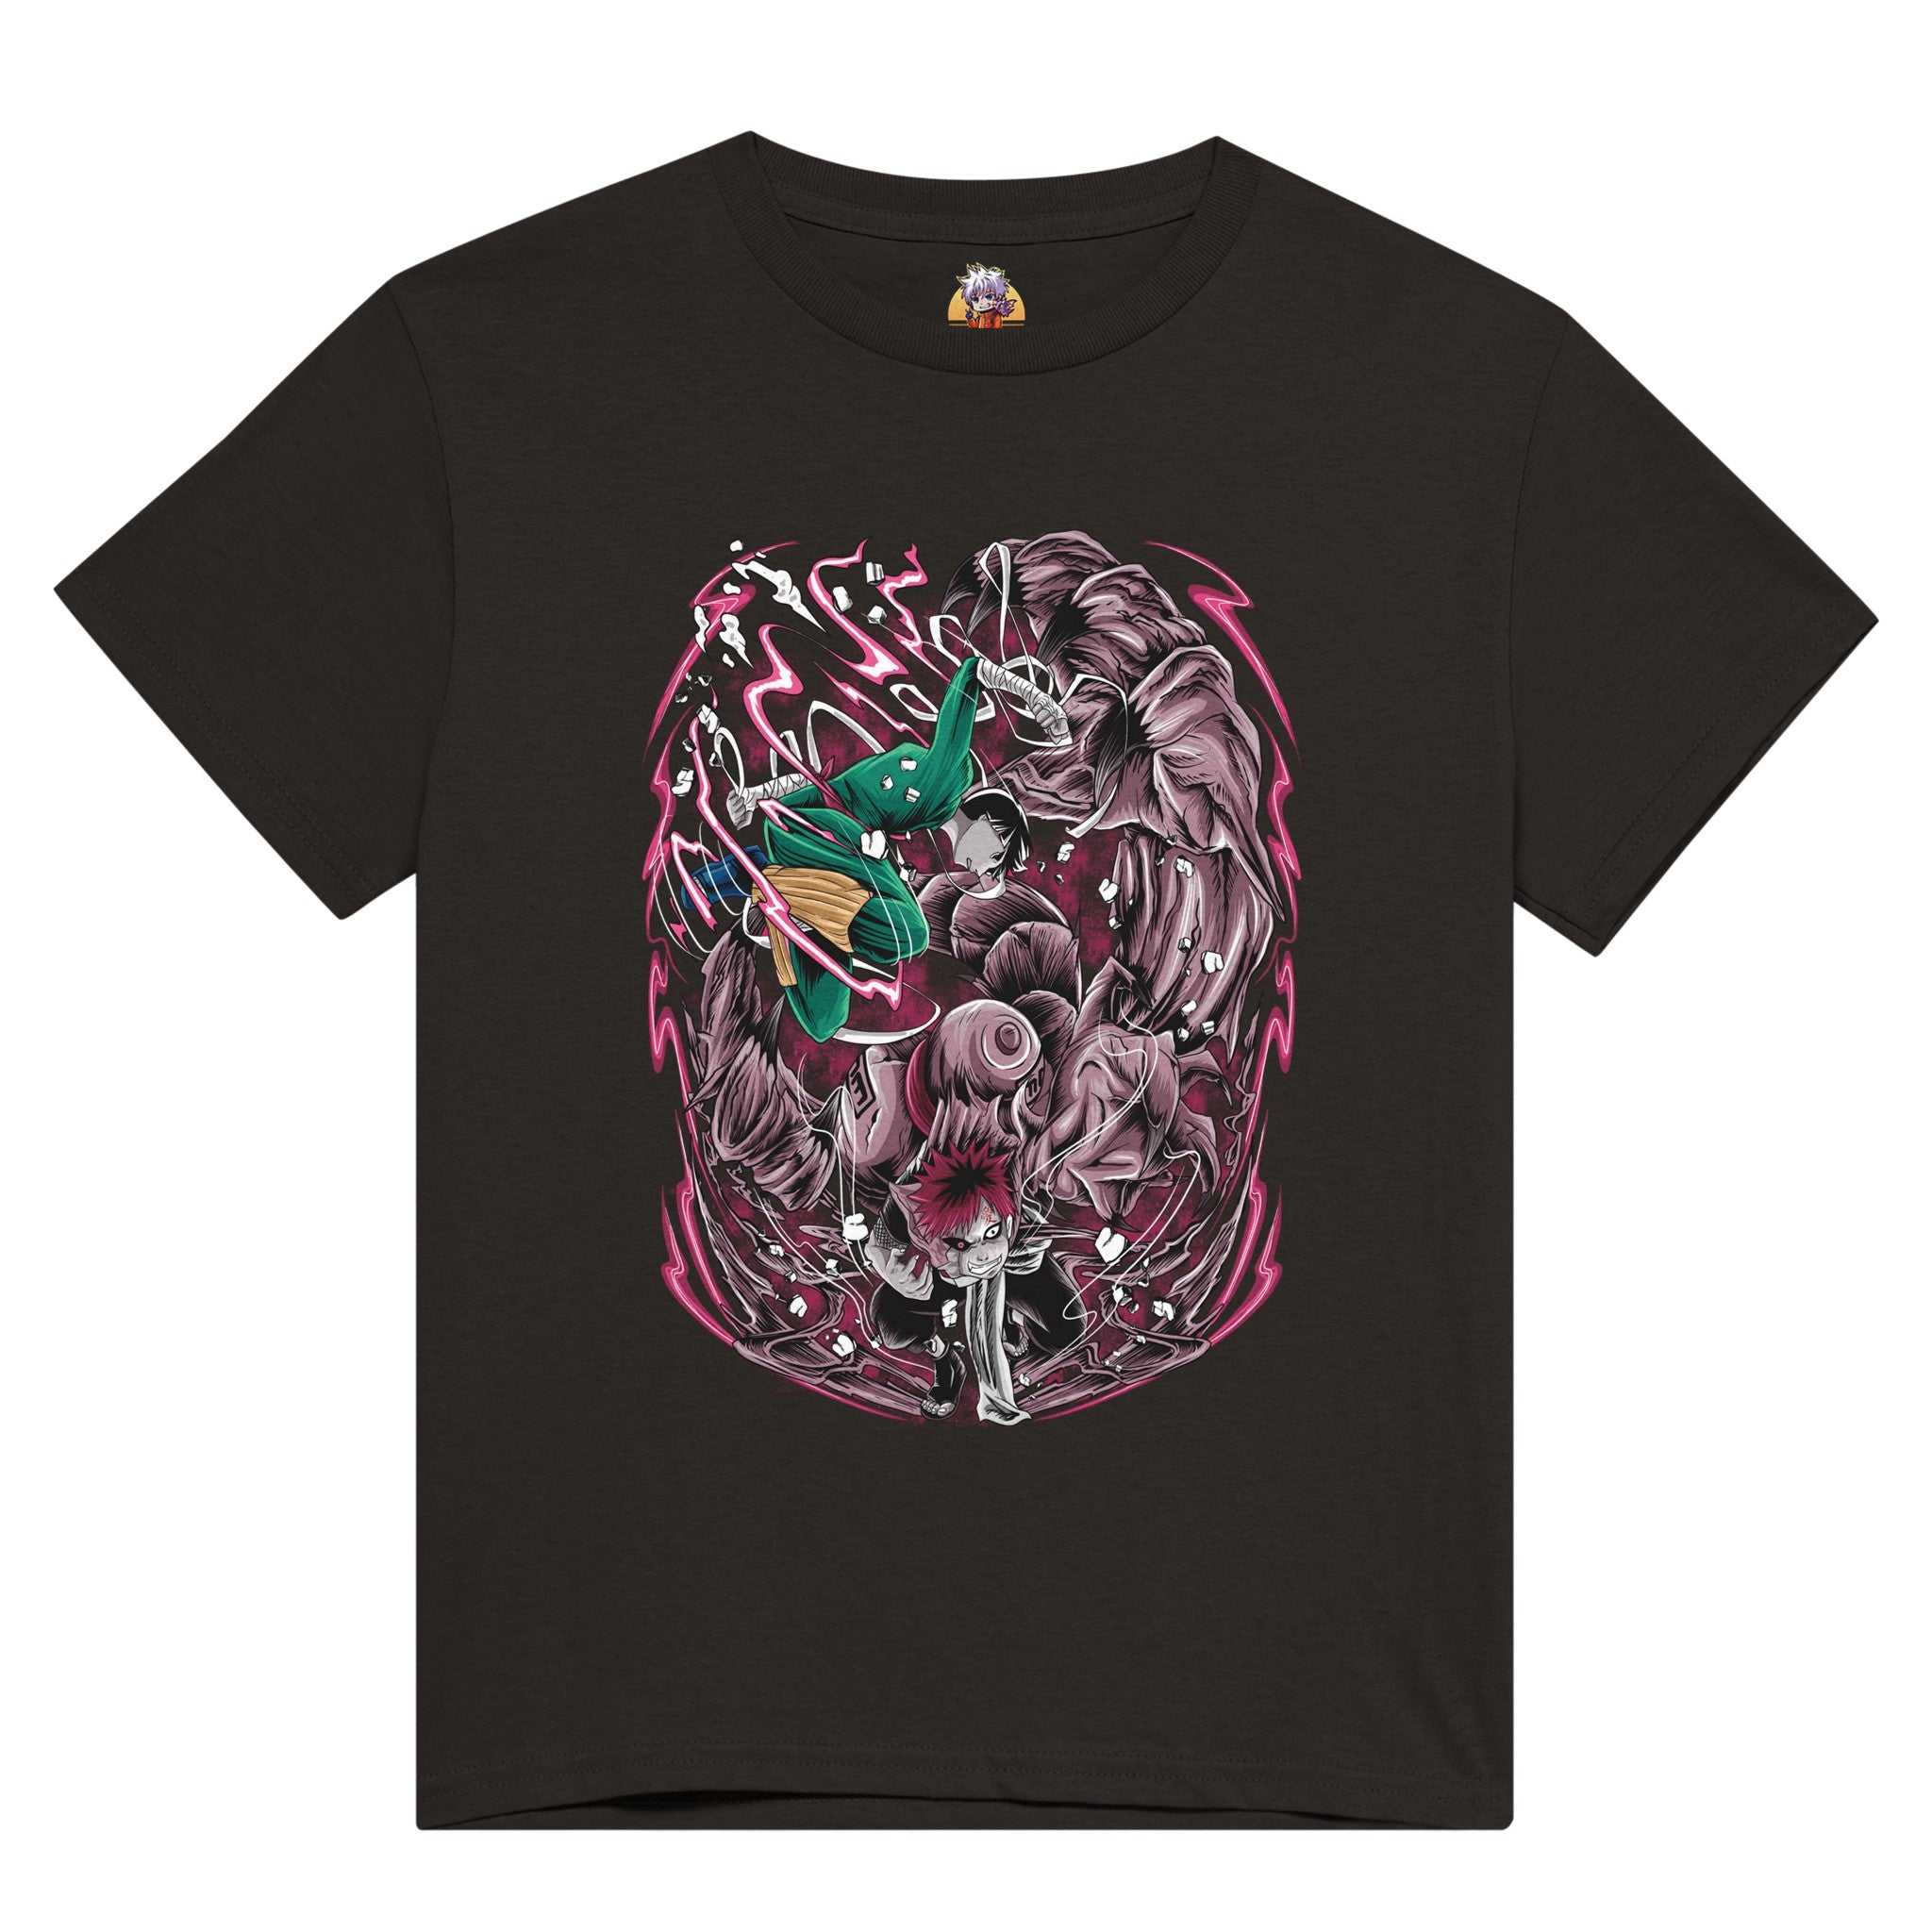 shop and buy naruto anime clothing gaara vs rock lee t-shirt